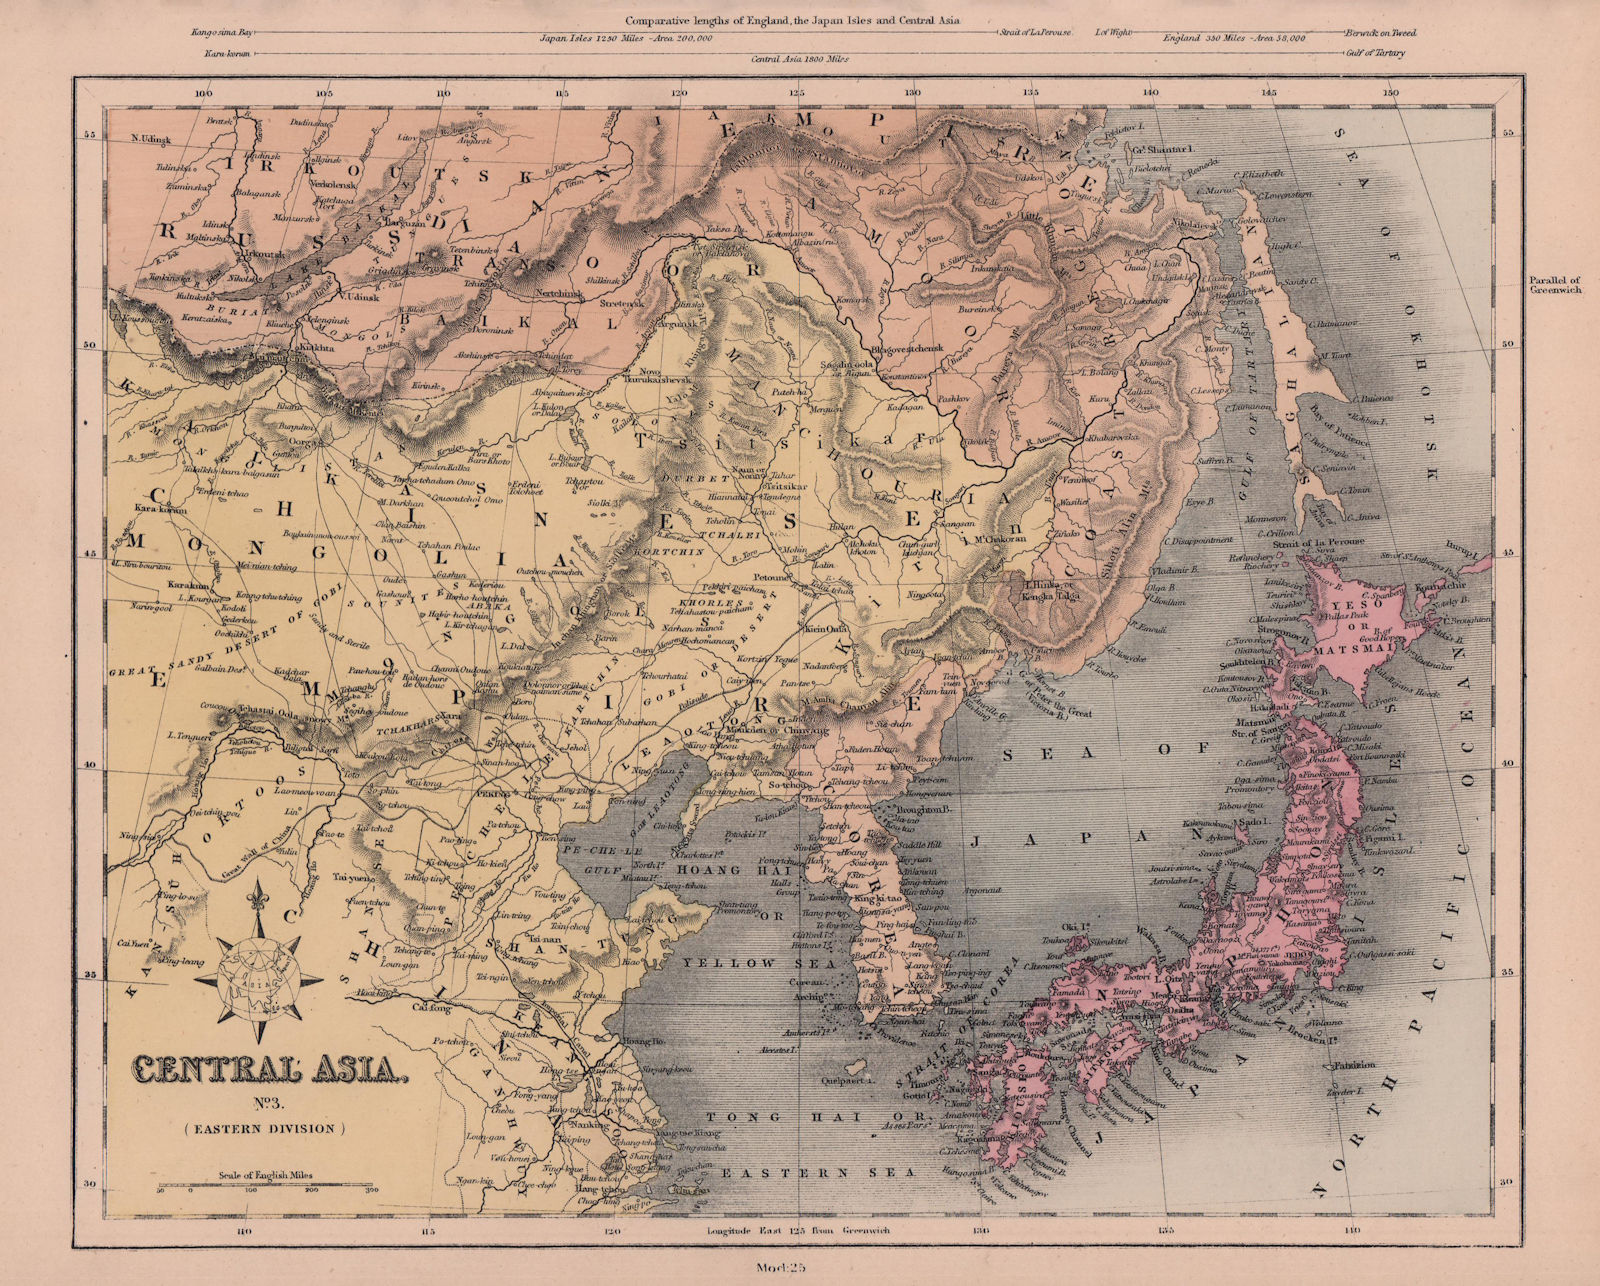 Associate Product Central Asia (Eastern). Japan Korea NE China Russian Far East. HUGHES 1876 map